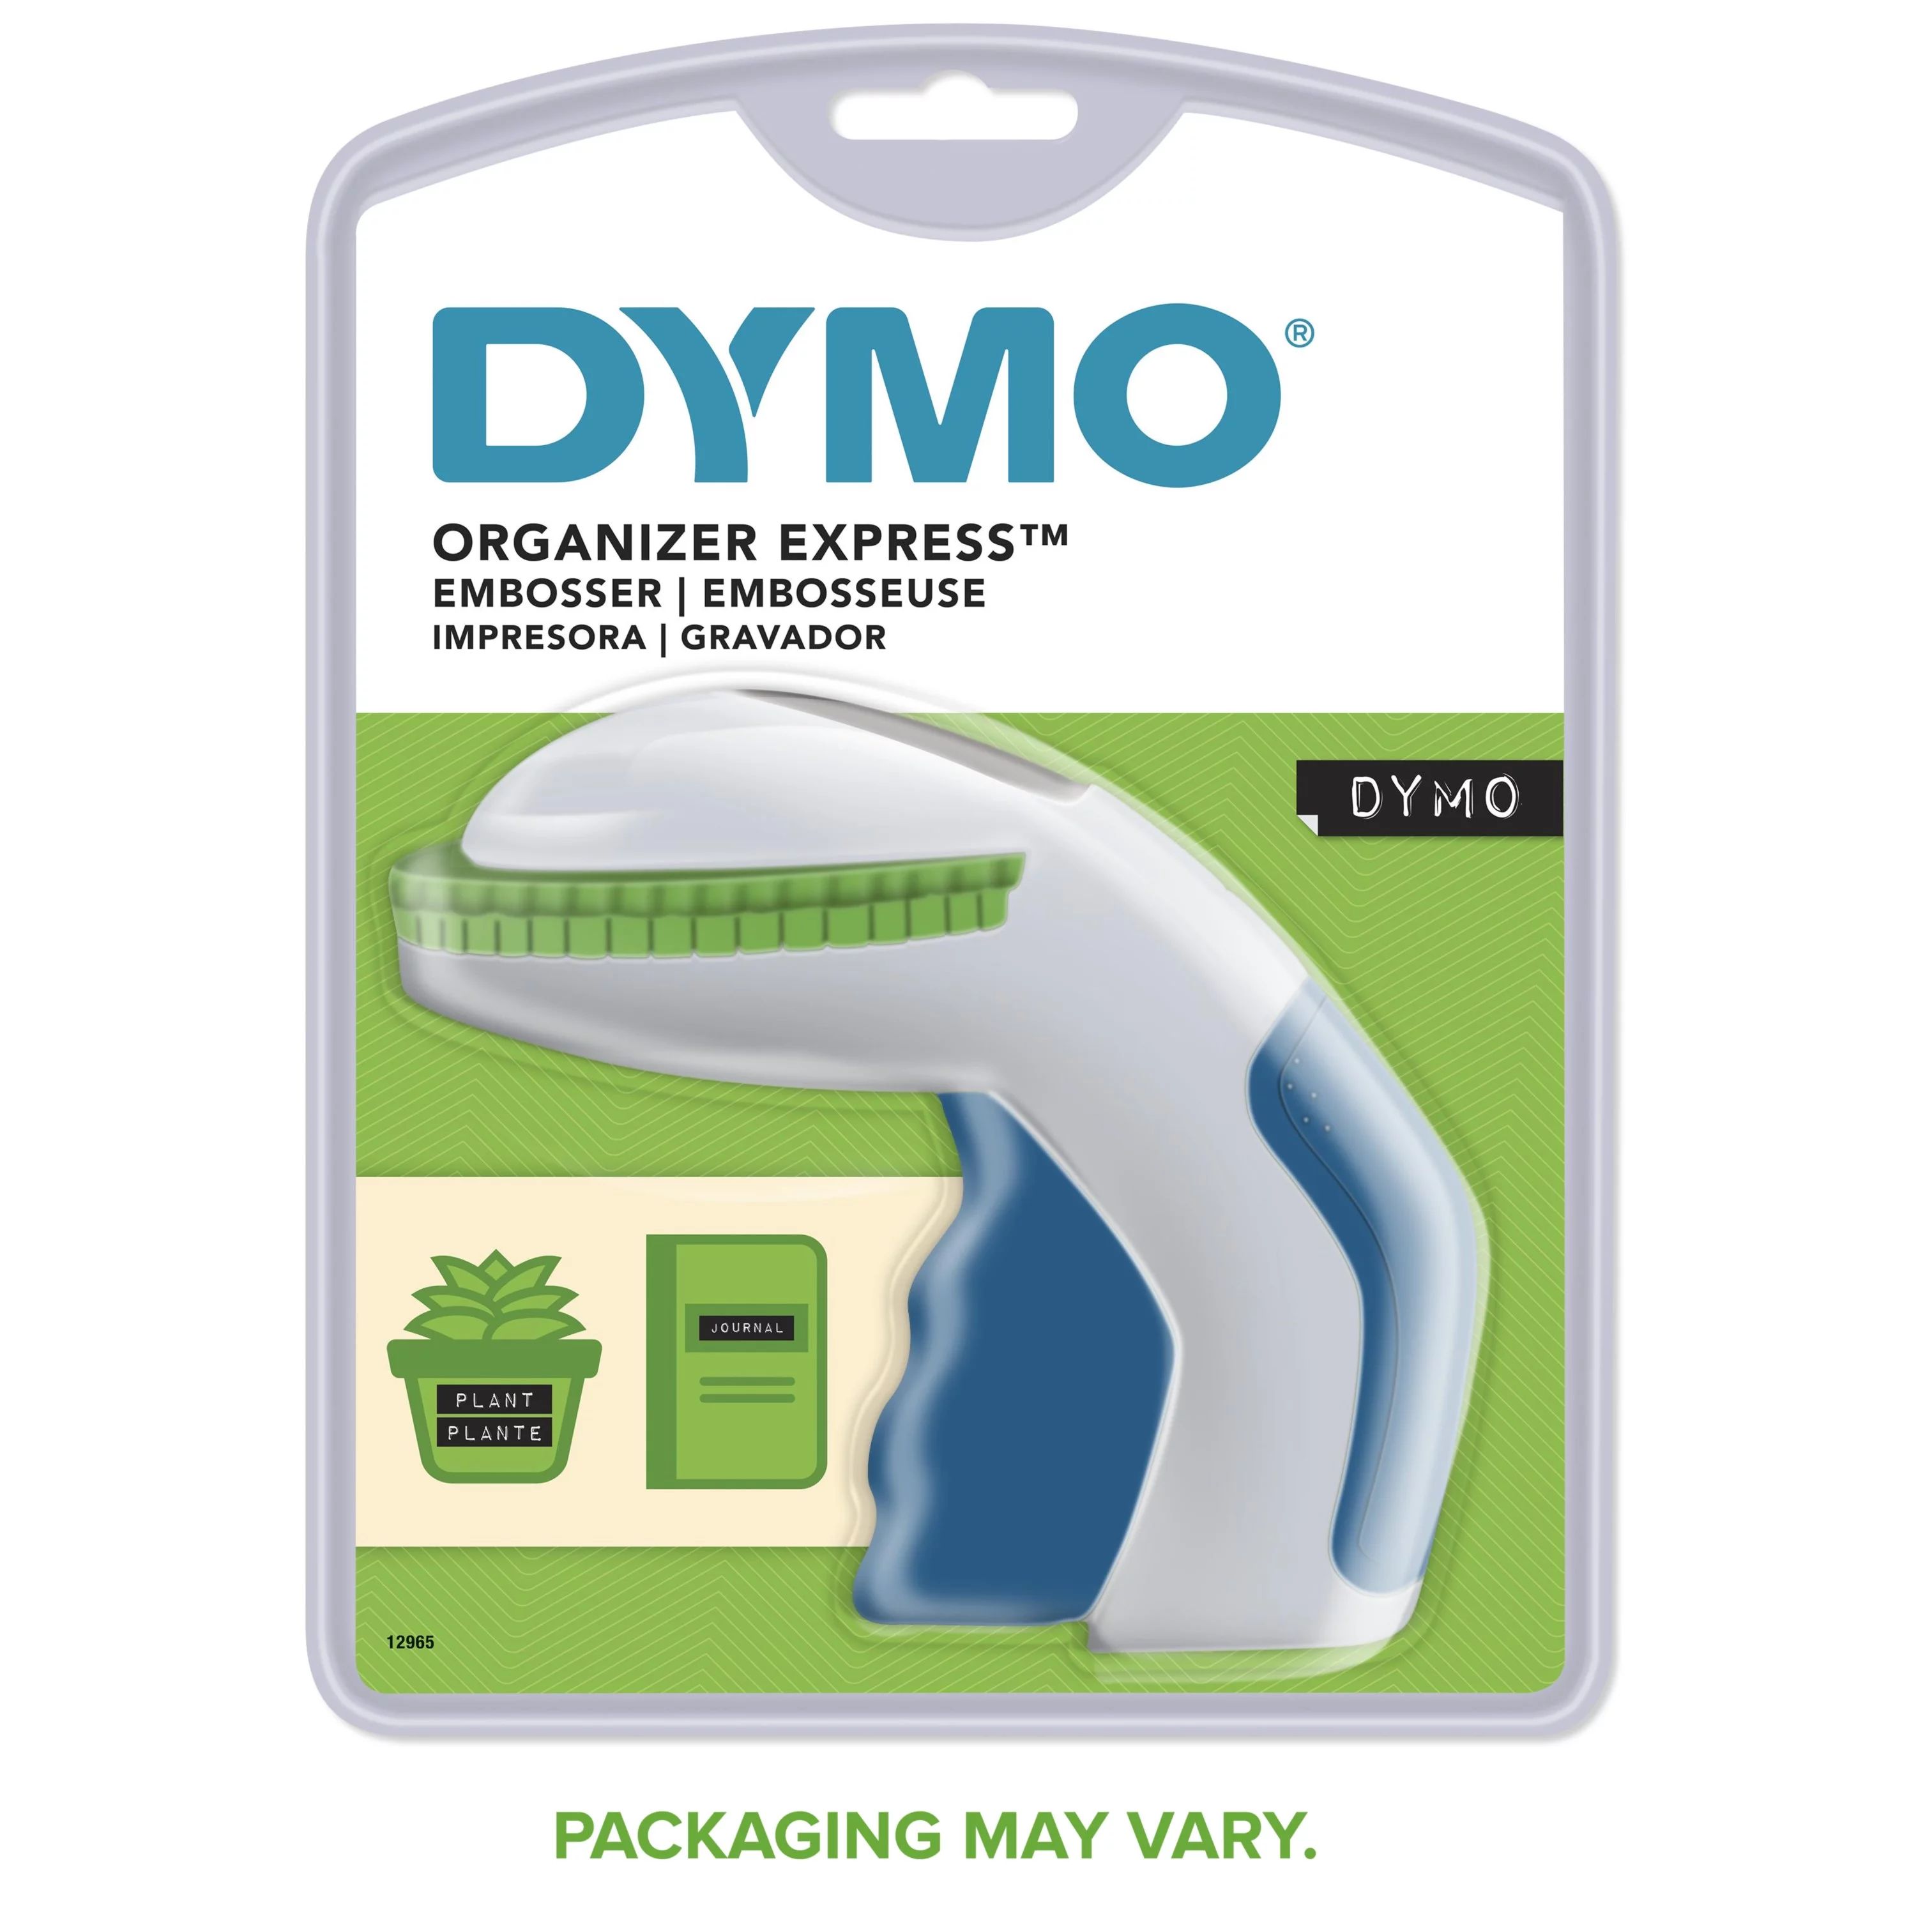 DYMO Organizer Xpress Embossing Label Maker | Walmart (US)